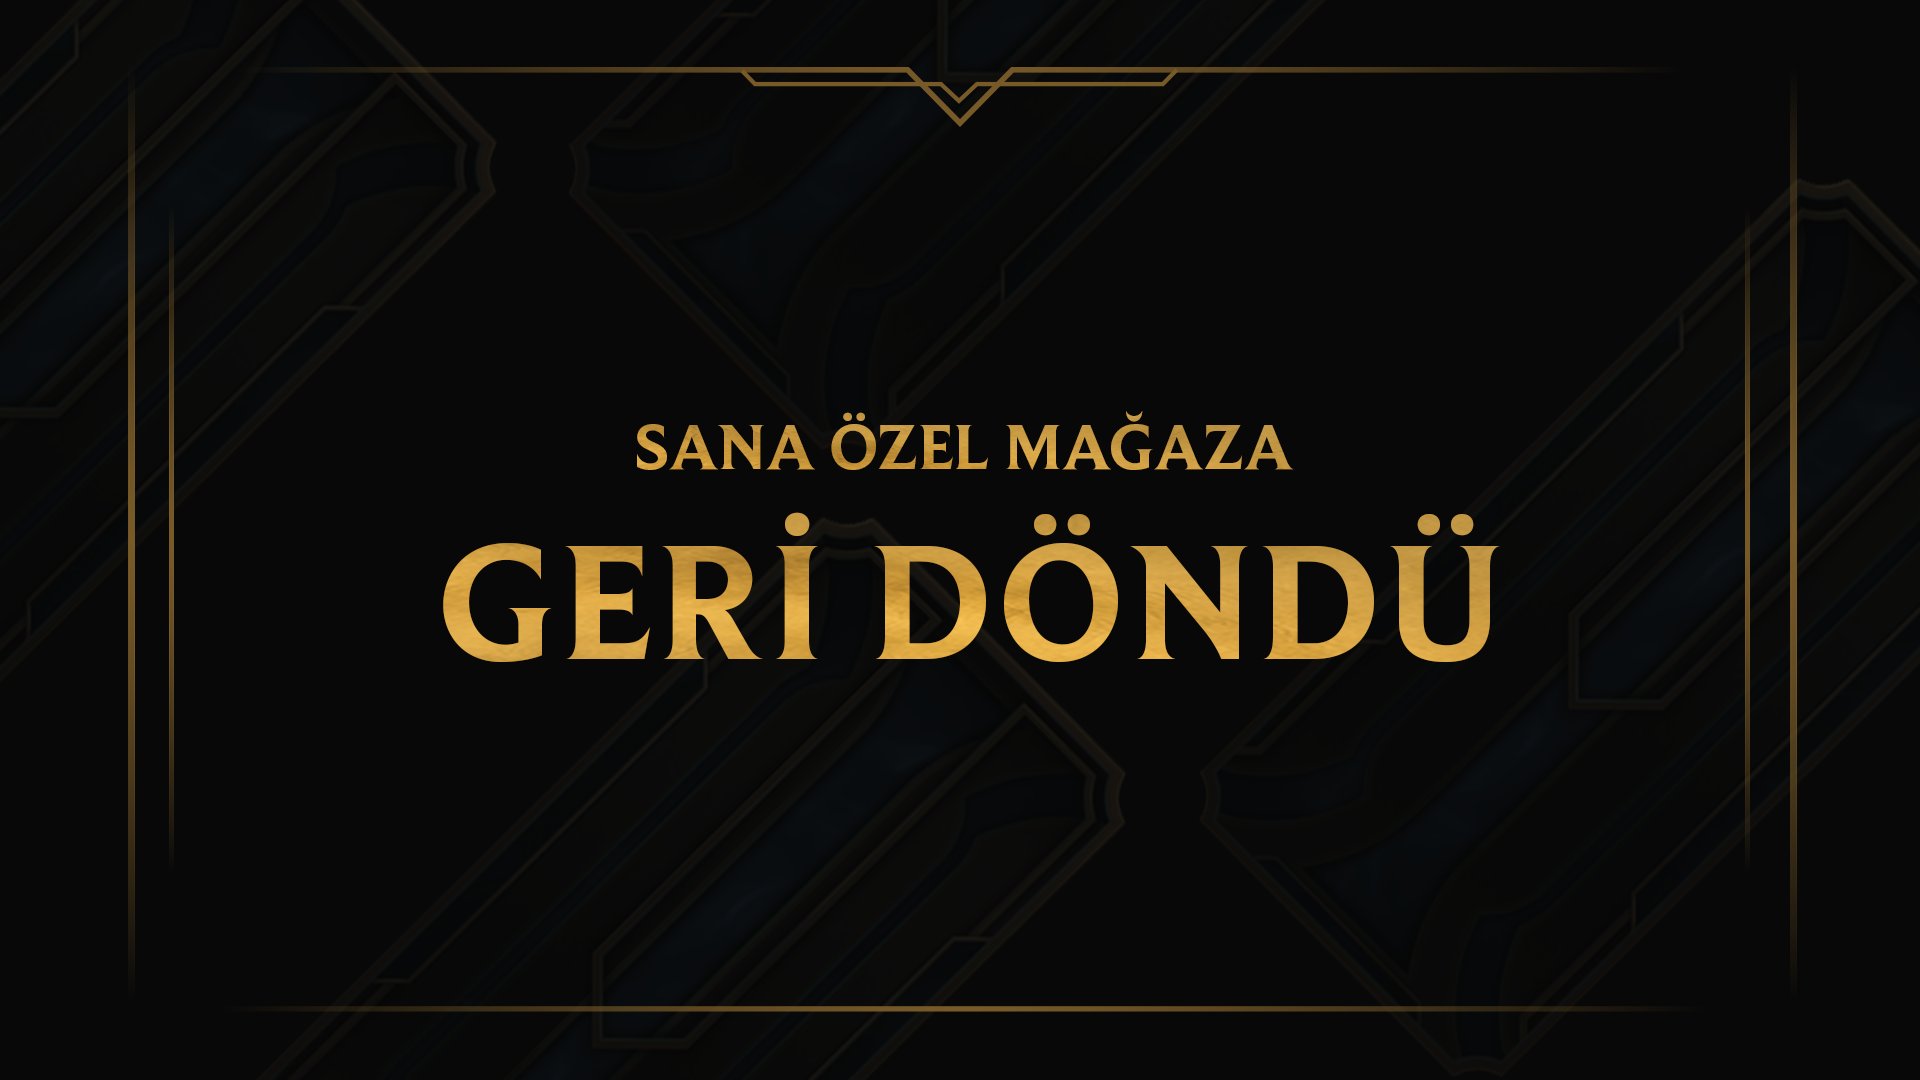 League of Legends Sana Özel Mağaza geri döndü!